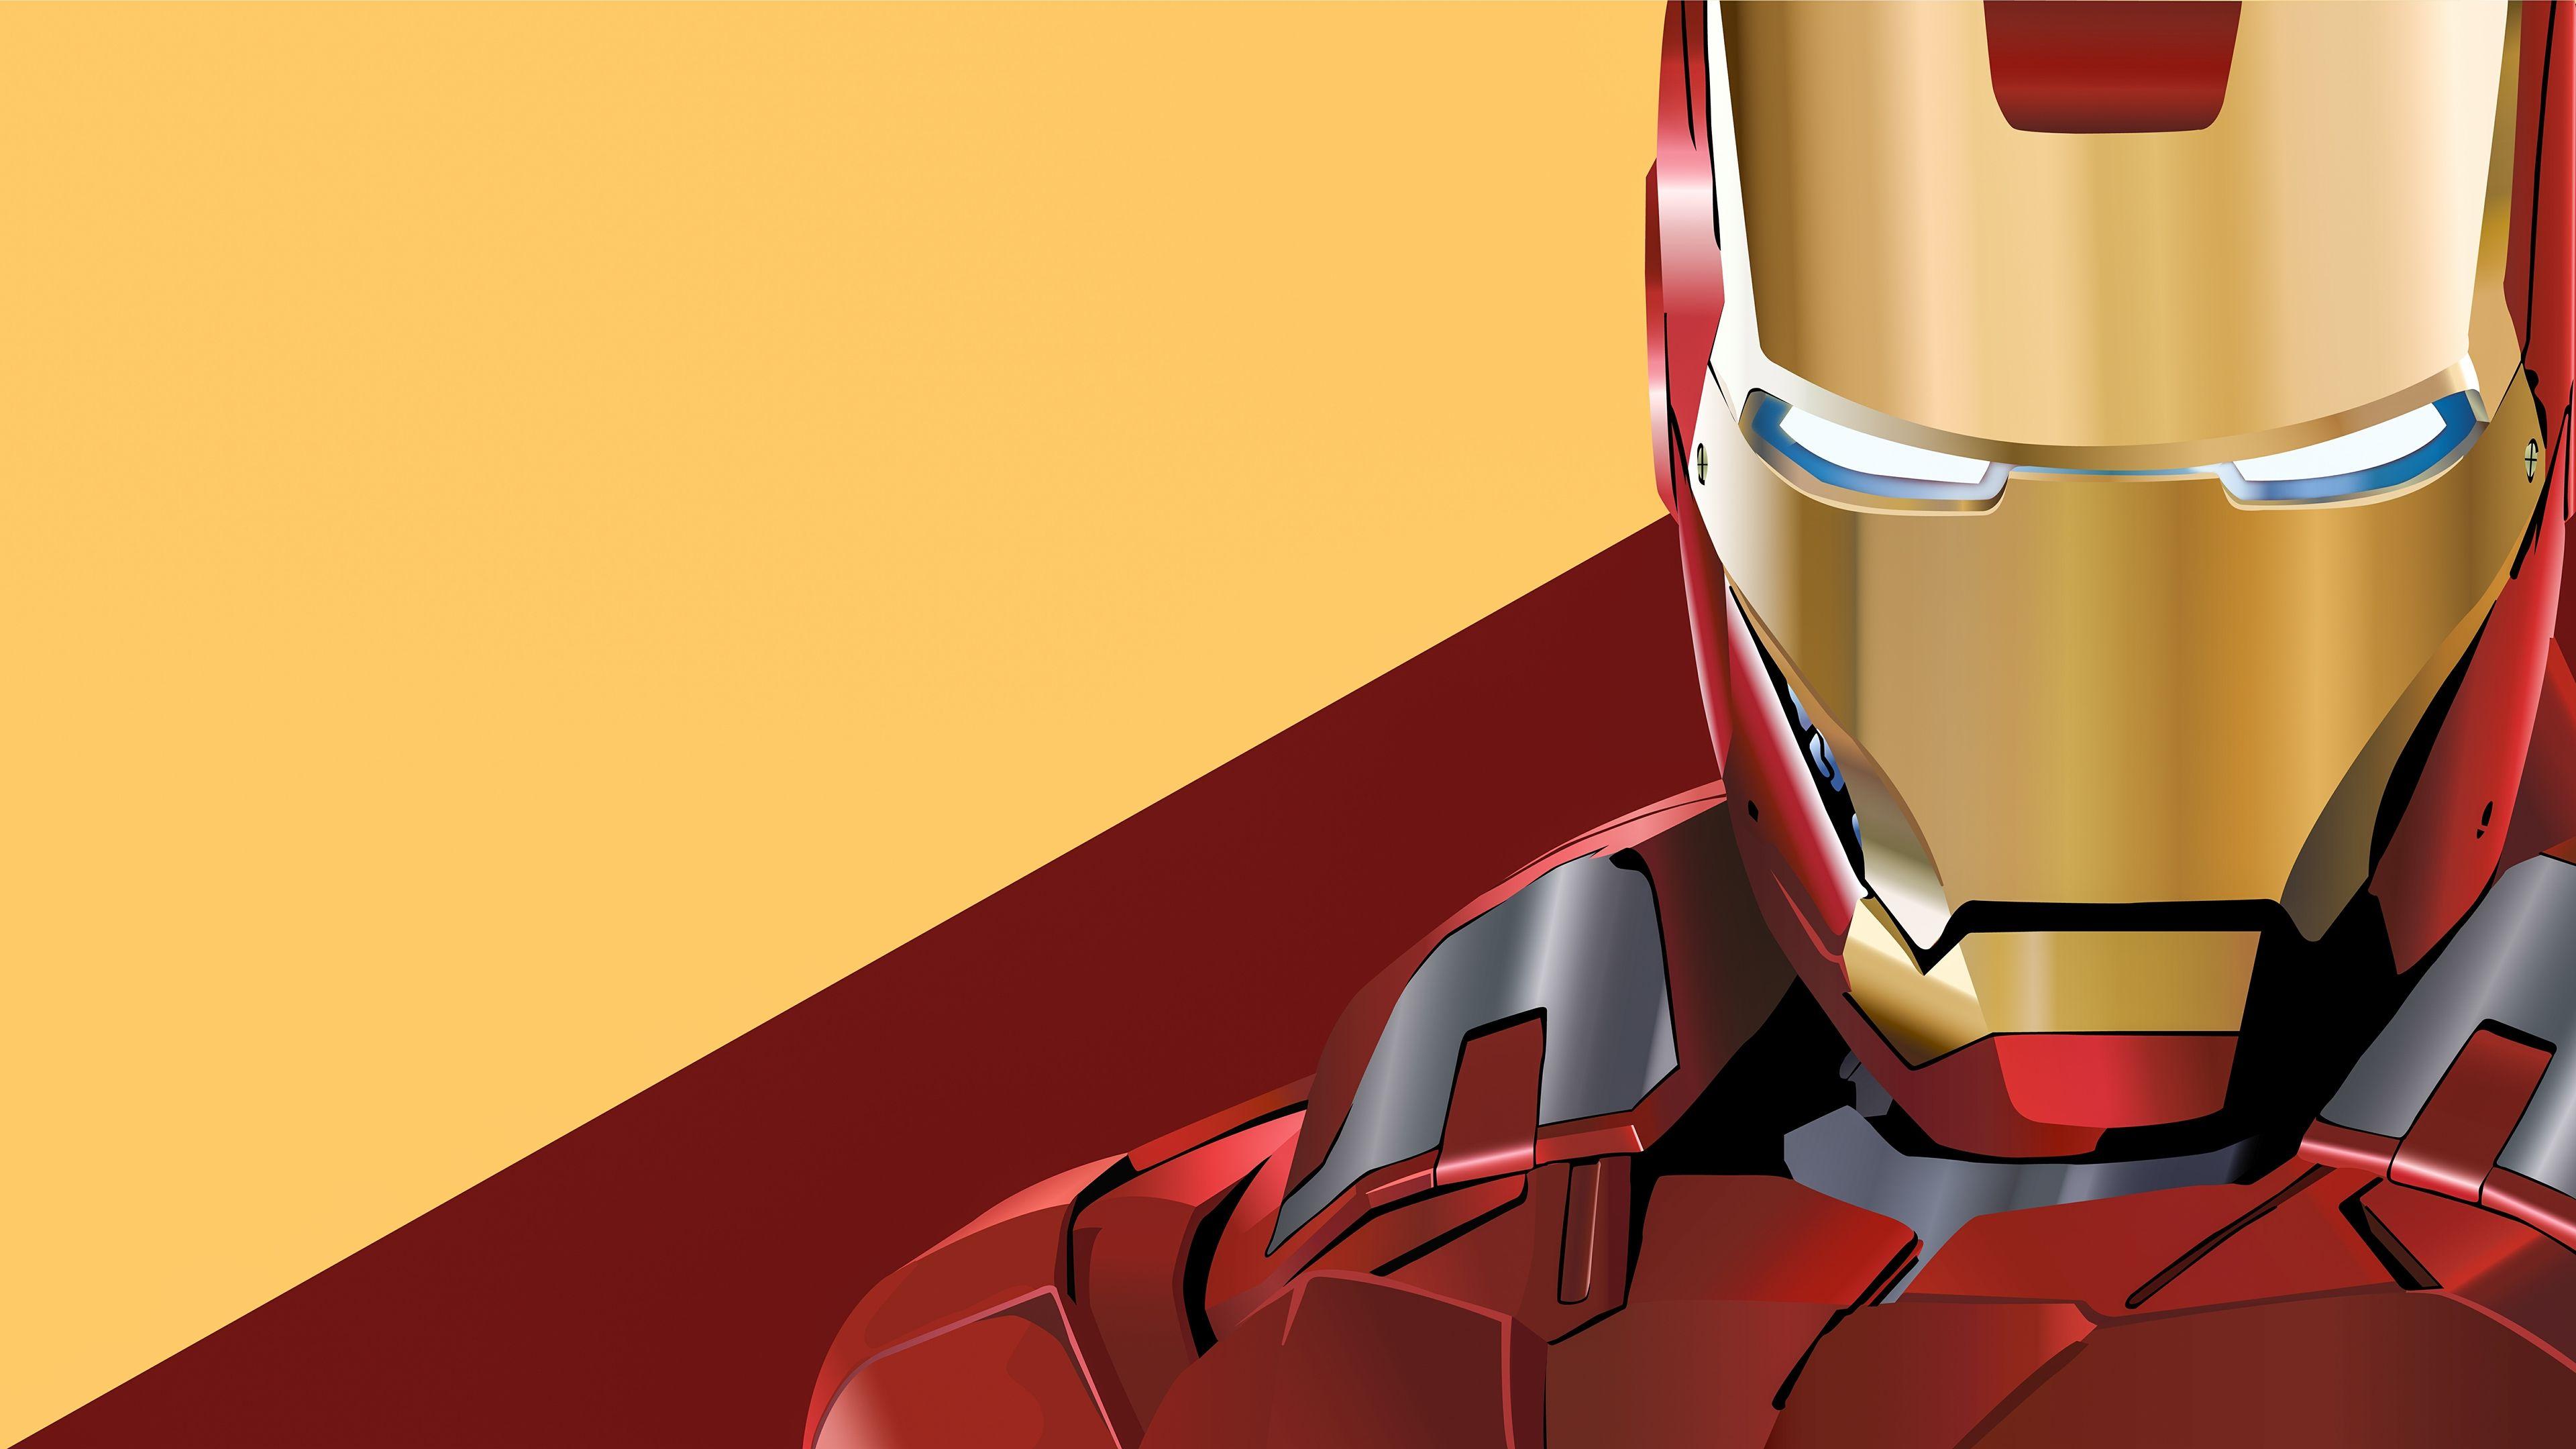 Iron Man Digital Artwork 4K superheroes wallpaper, iron man